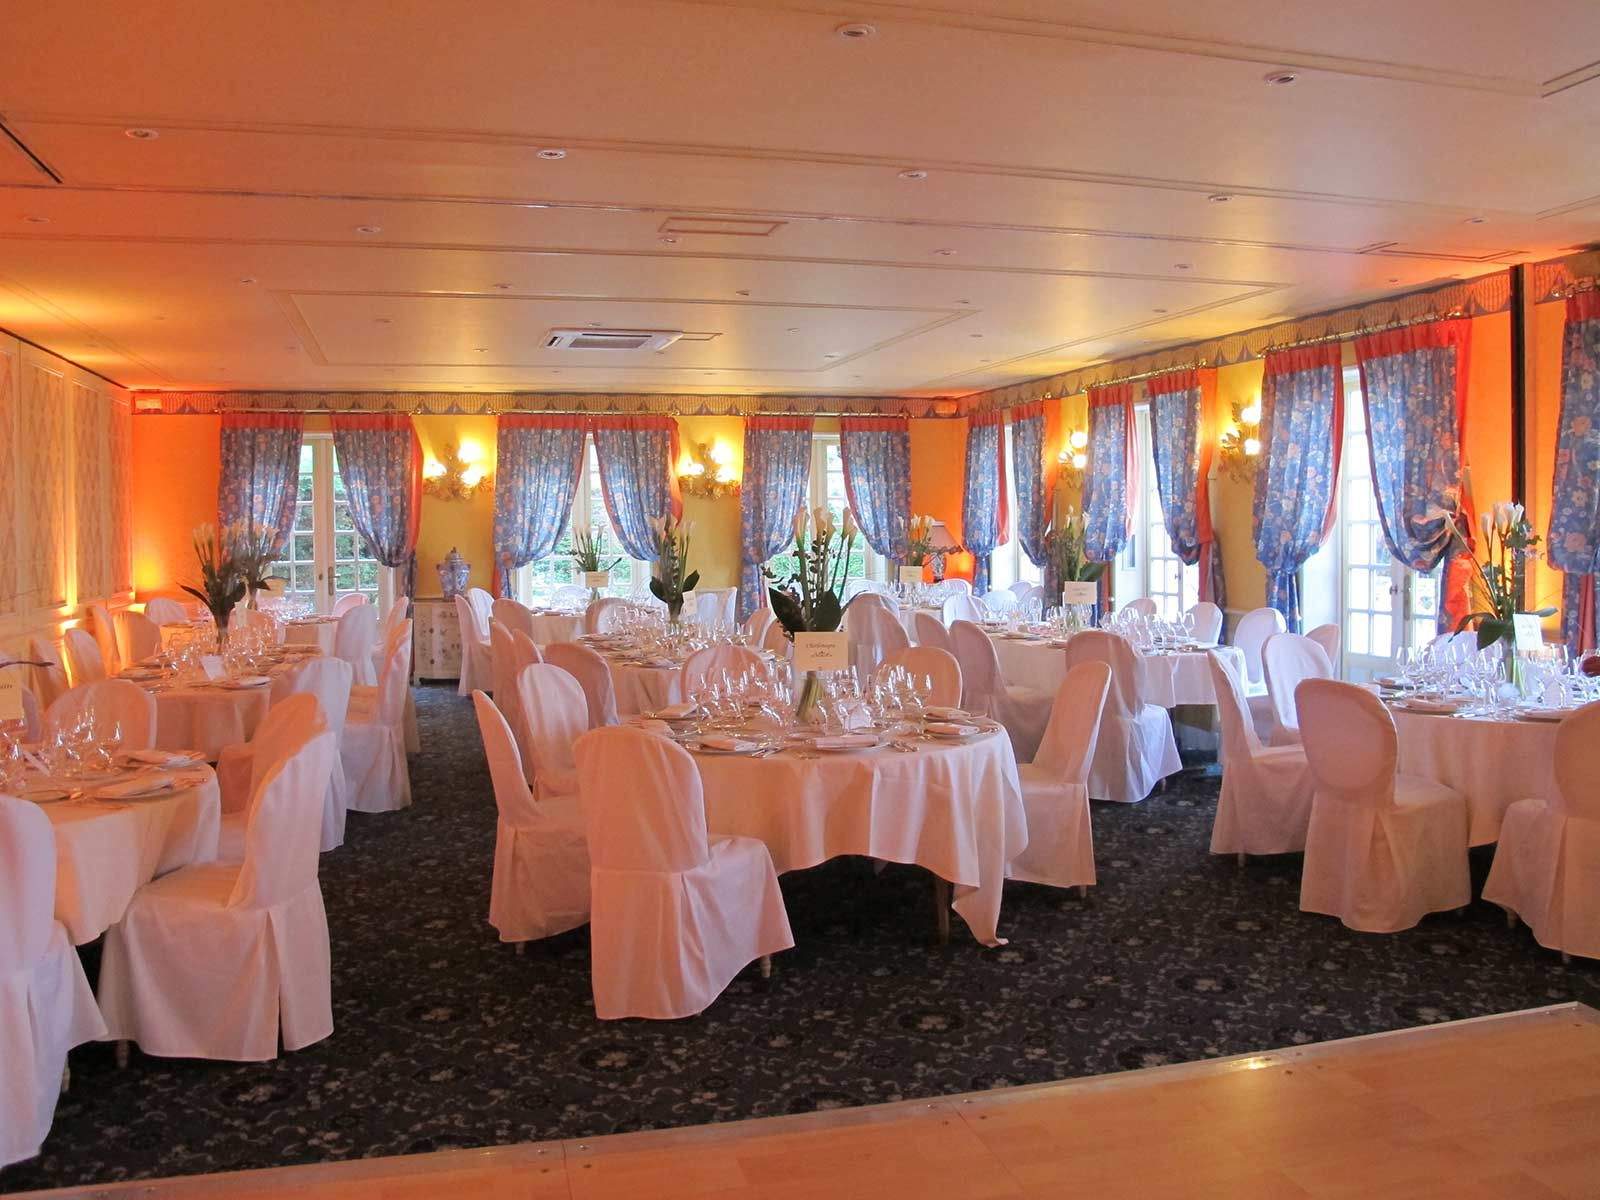 Reception room of the Château de Beaulieu, Venue Rental for Weddings